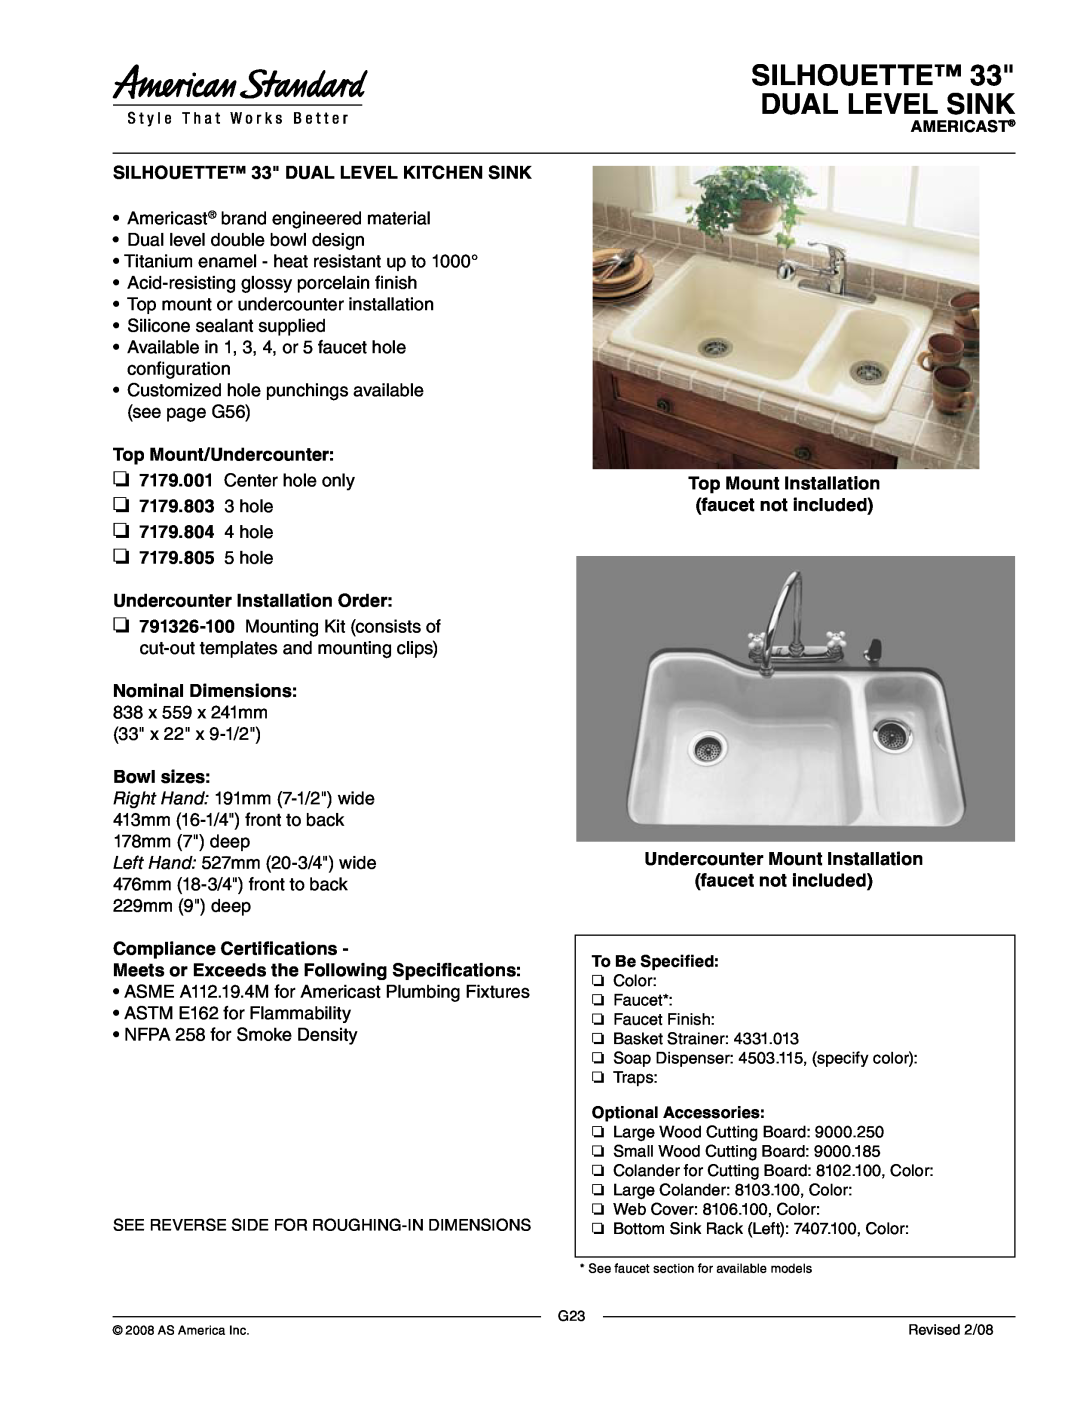 American Standard 7179.001, 7179.803, 7179.804, 7179.805 dimensions Silhouette Dual Level Sink 